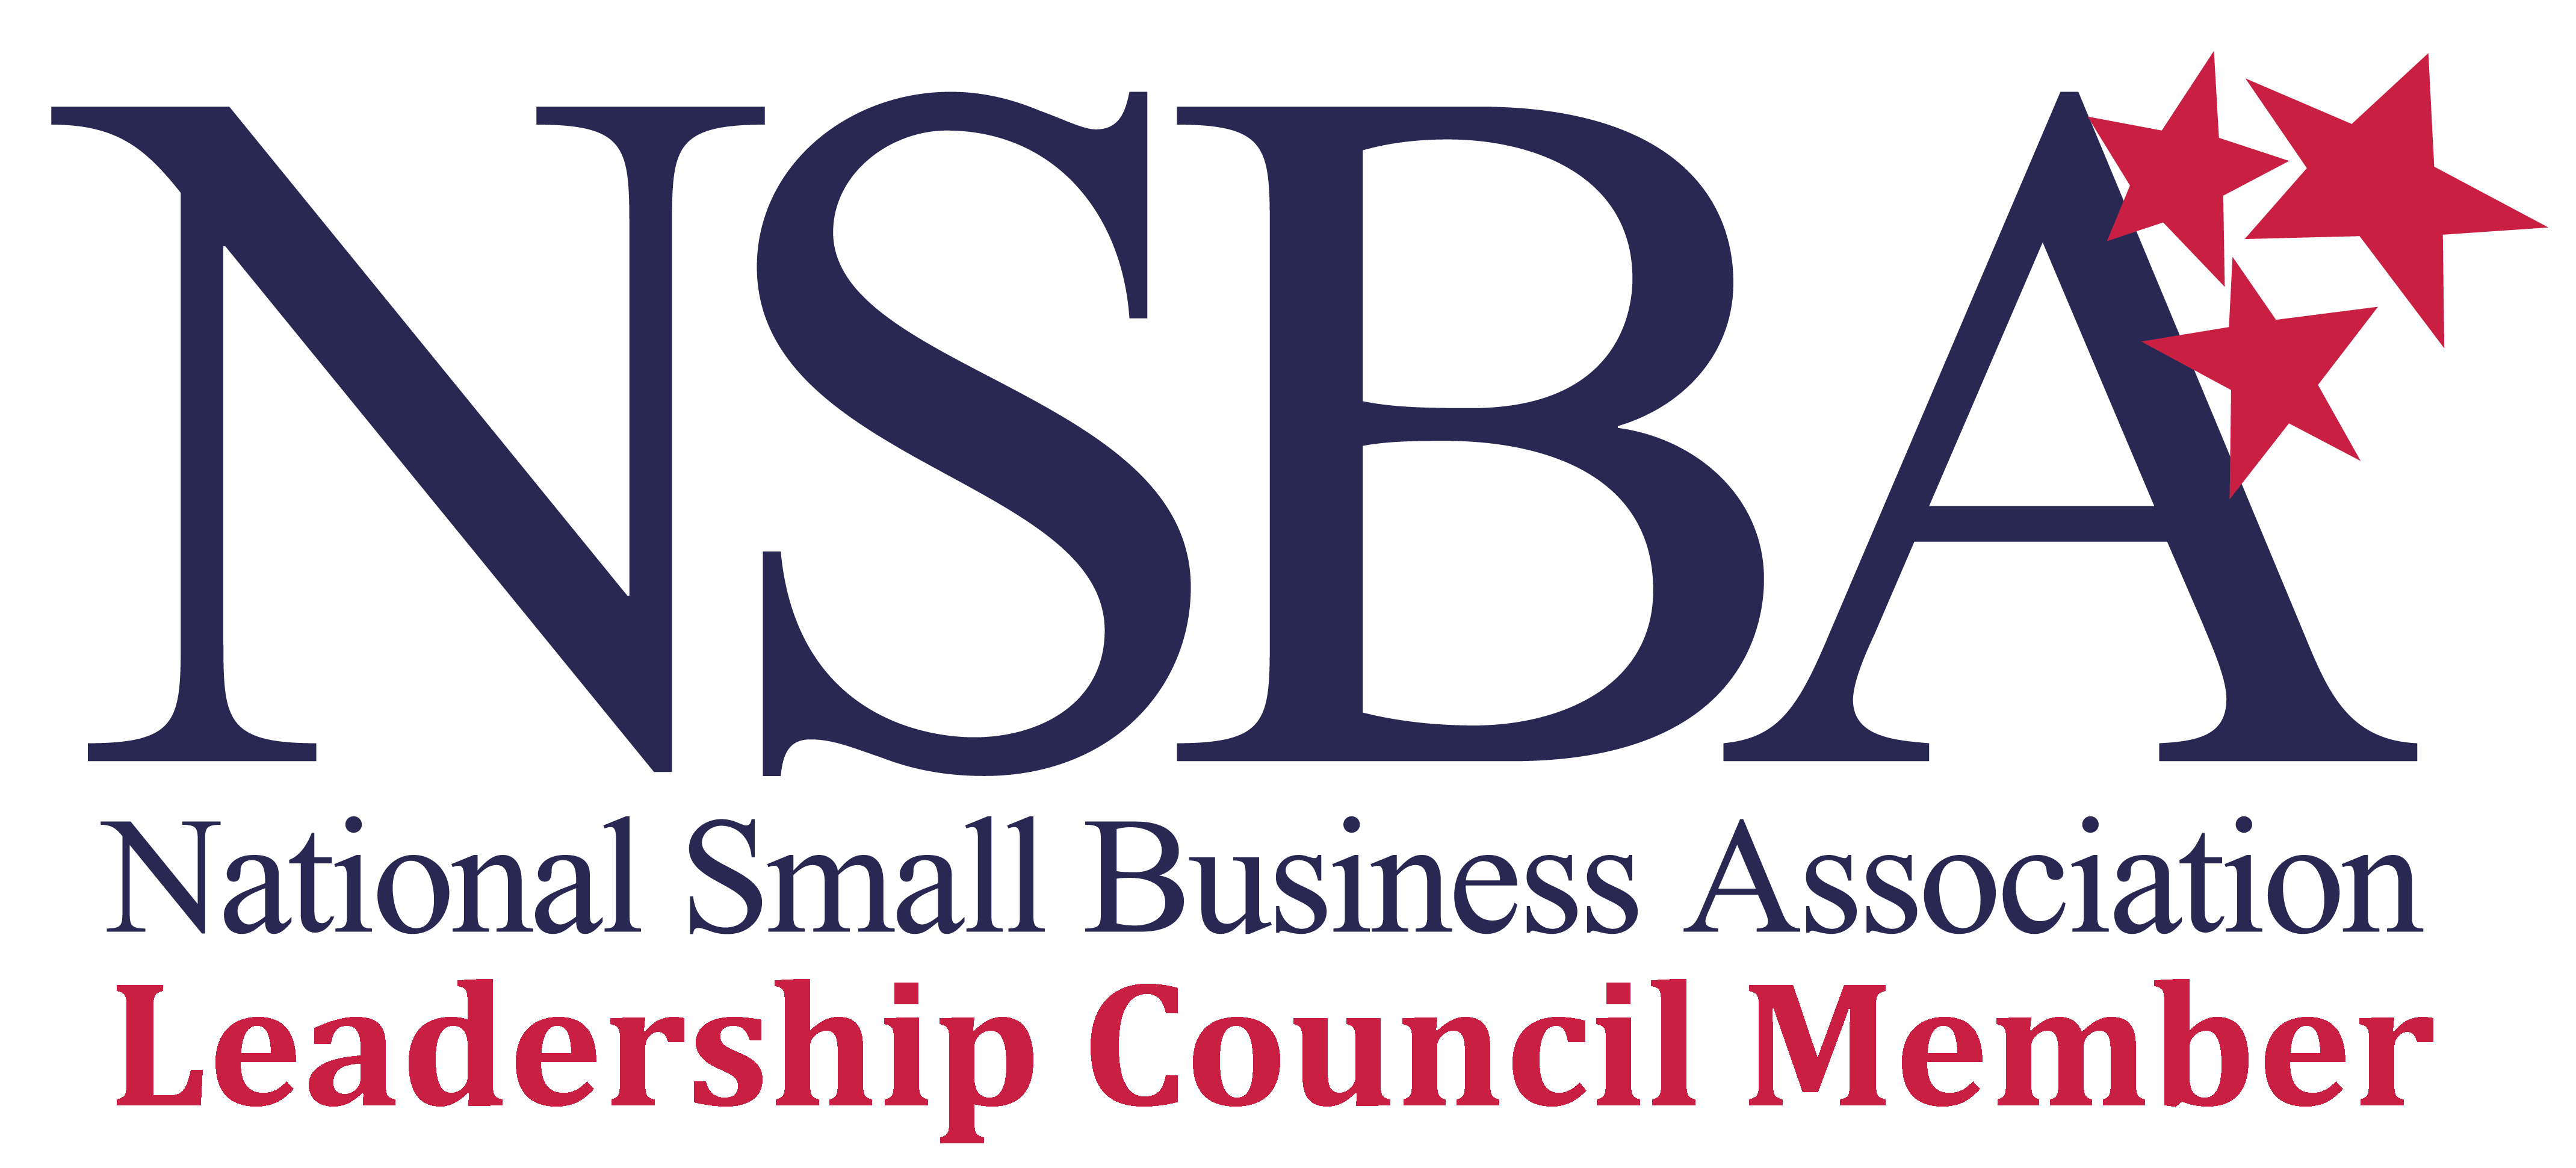 National Small Business Association Leadership Council logo. 